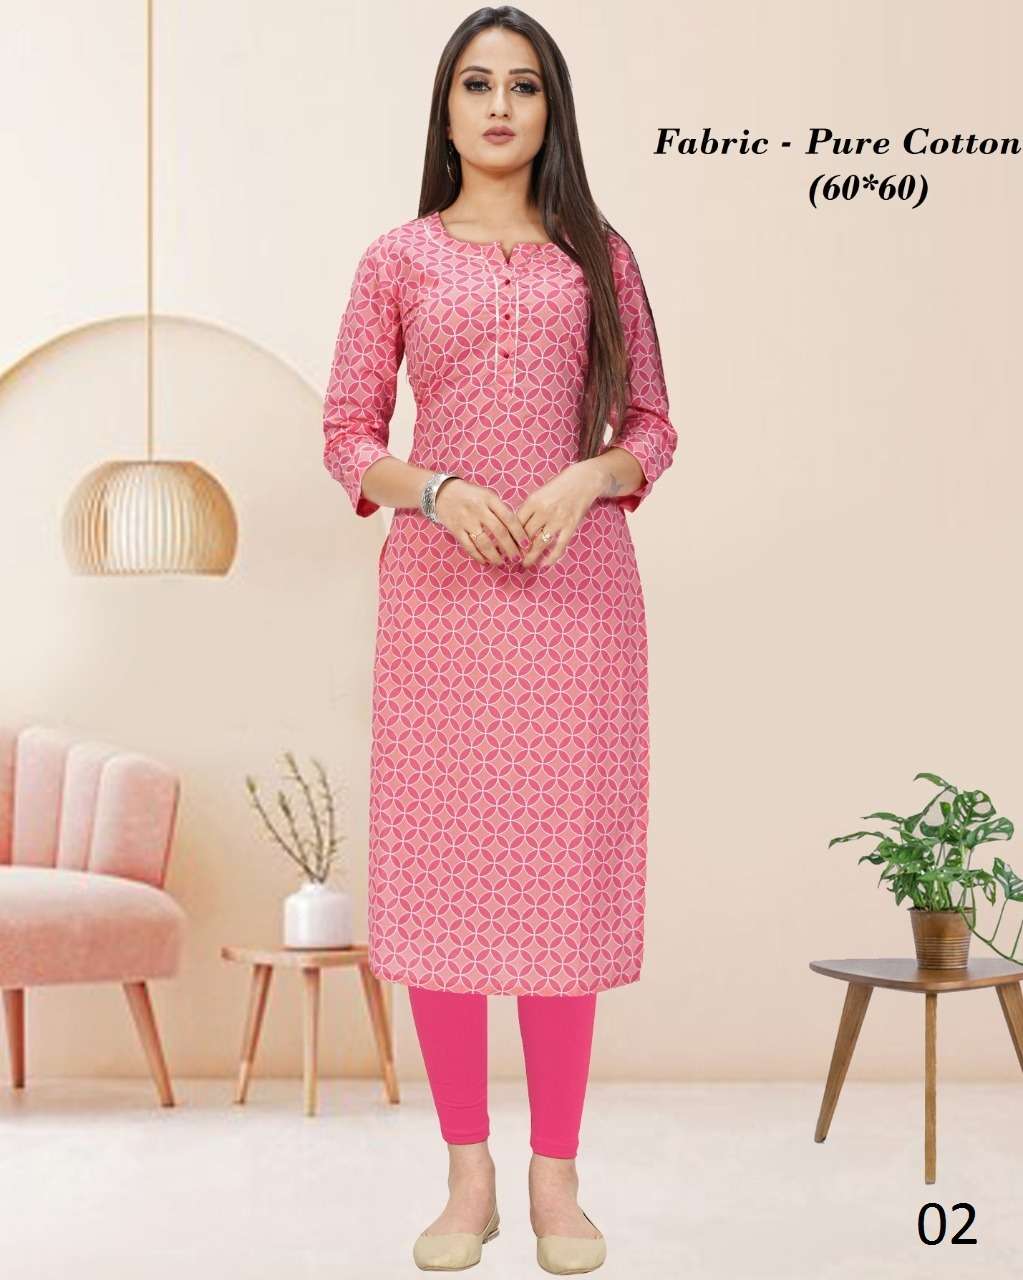 pratham fashion olivia trendy printed kurti with jaipuri prints new catalogue 